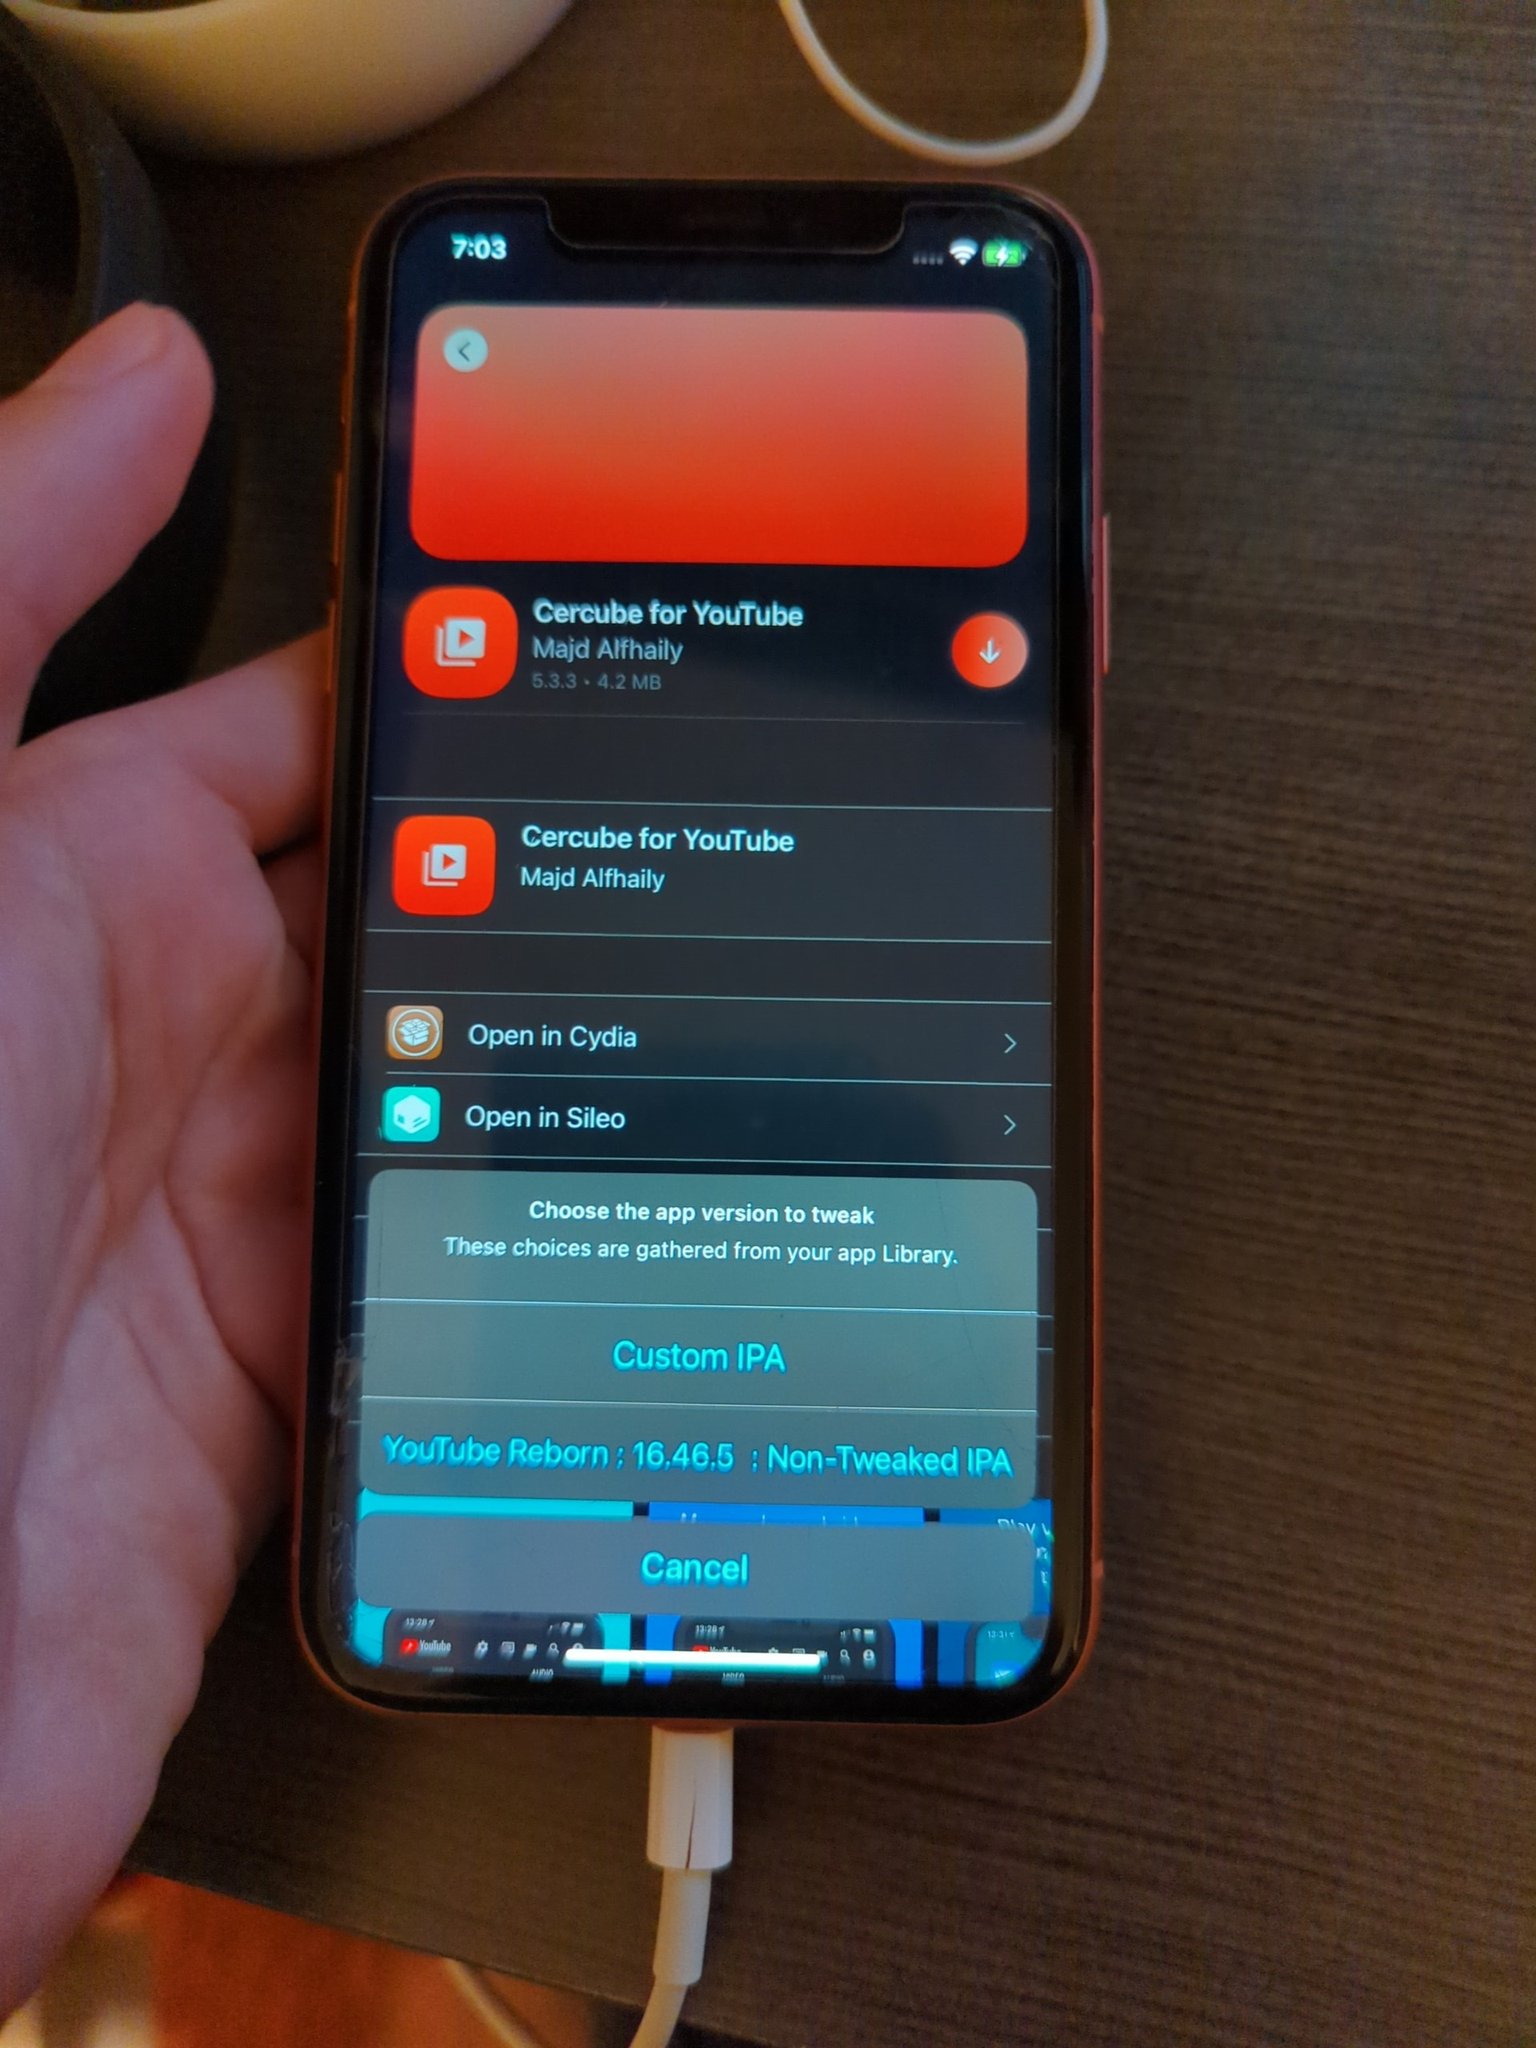 Scarlet App (IPA Installer) For iOS